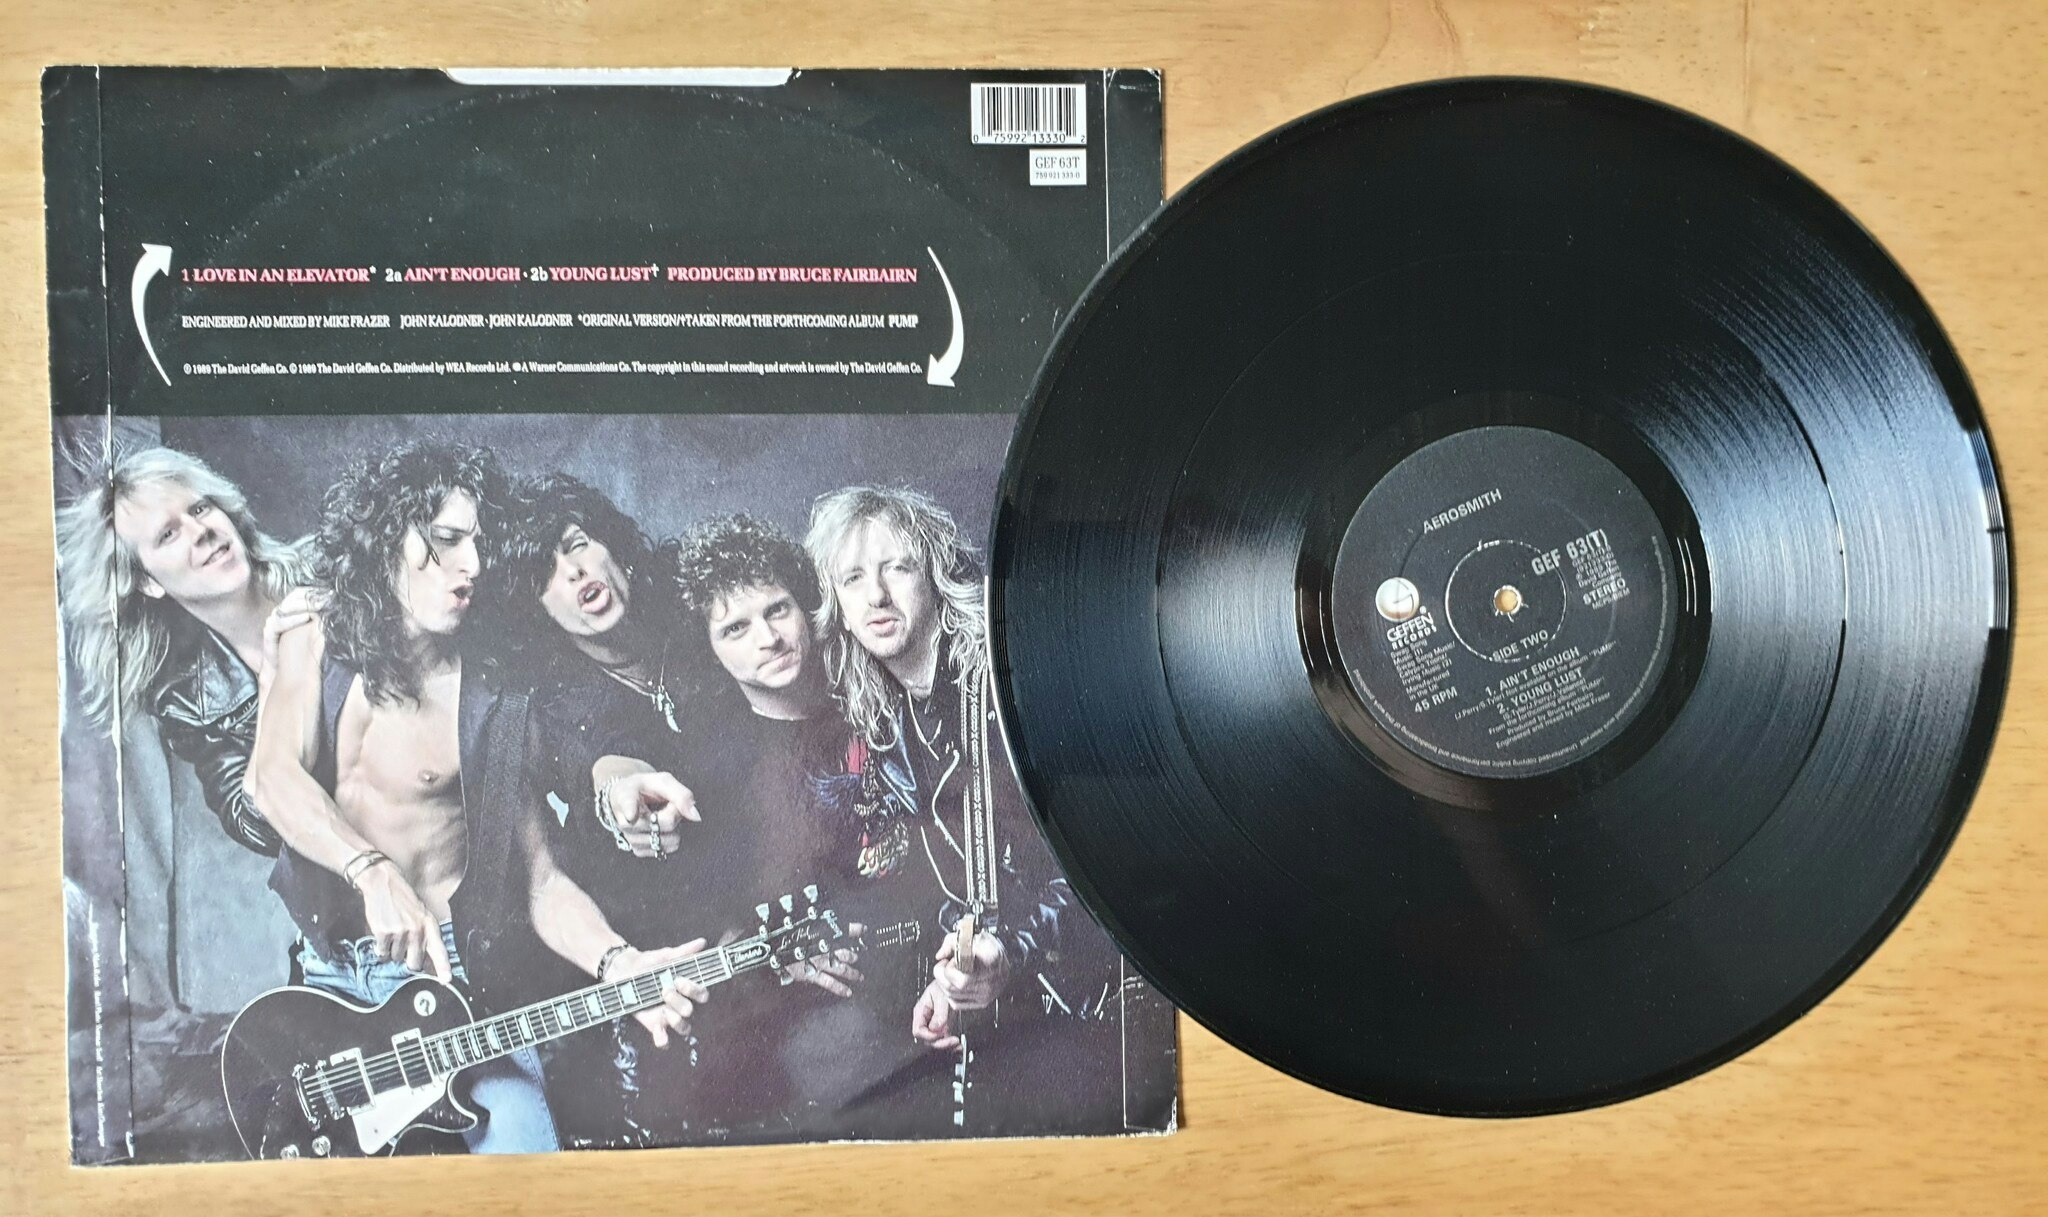 Aerosmith, Love in a elevator. Vinyl S 12"